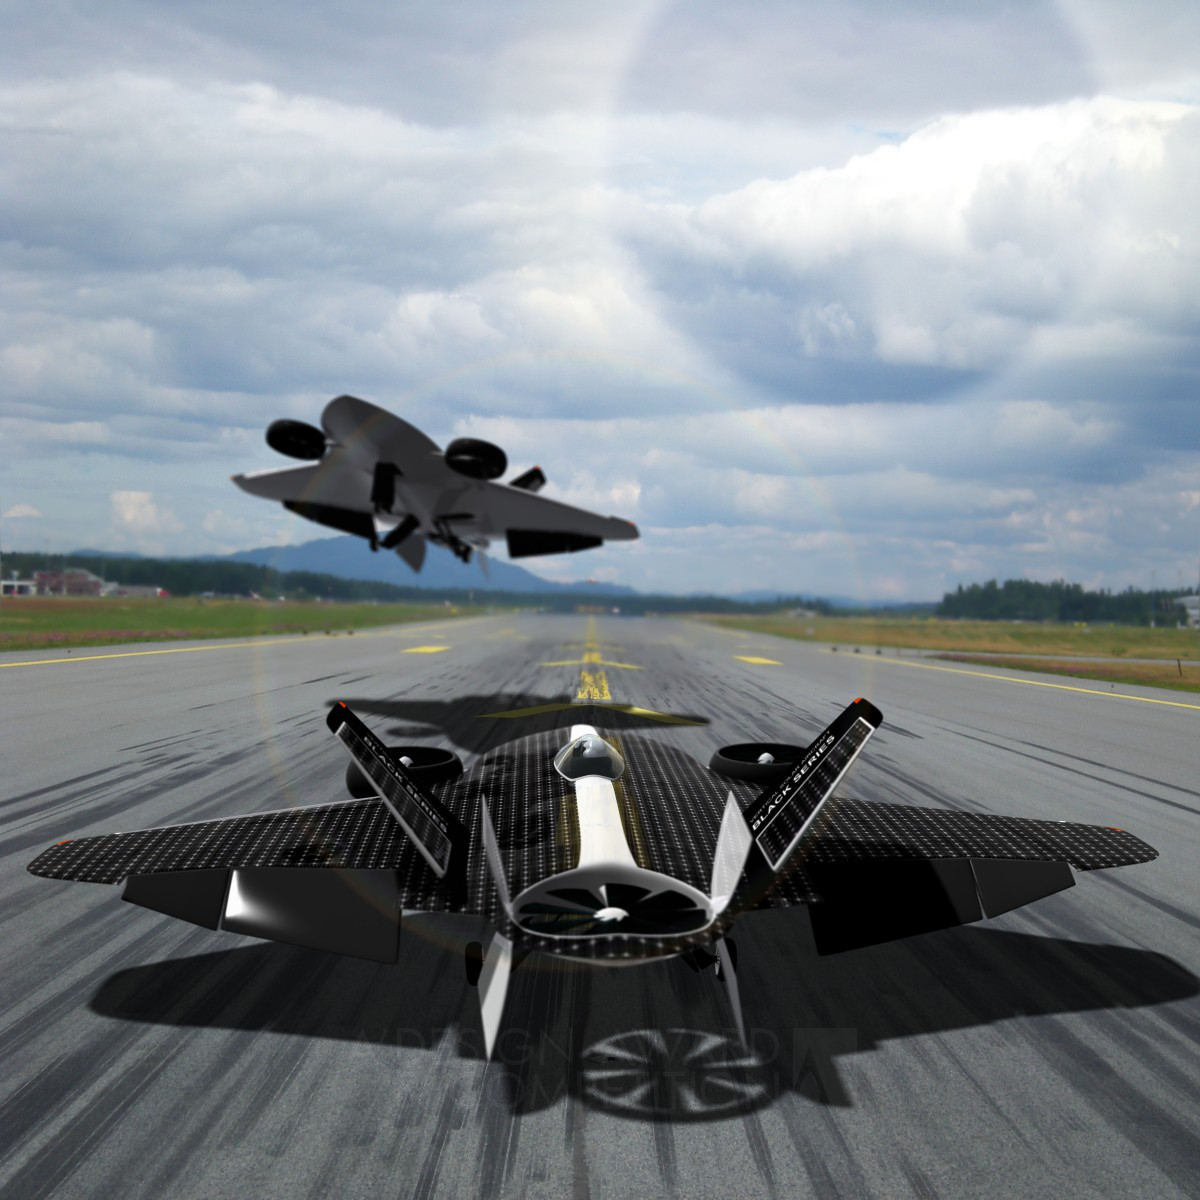 VSA Vertical Solar Aircraft by Arman Abadi Iron Futuristic Design Award Winner 2013 